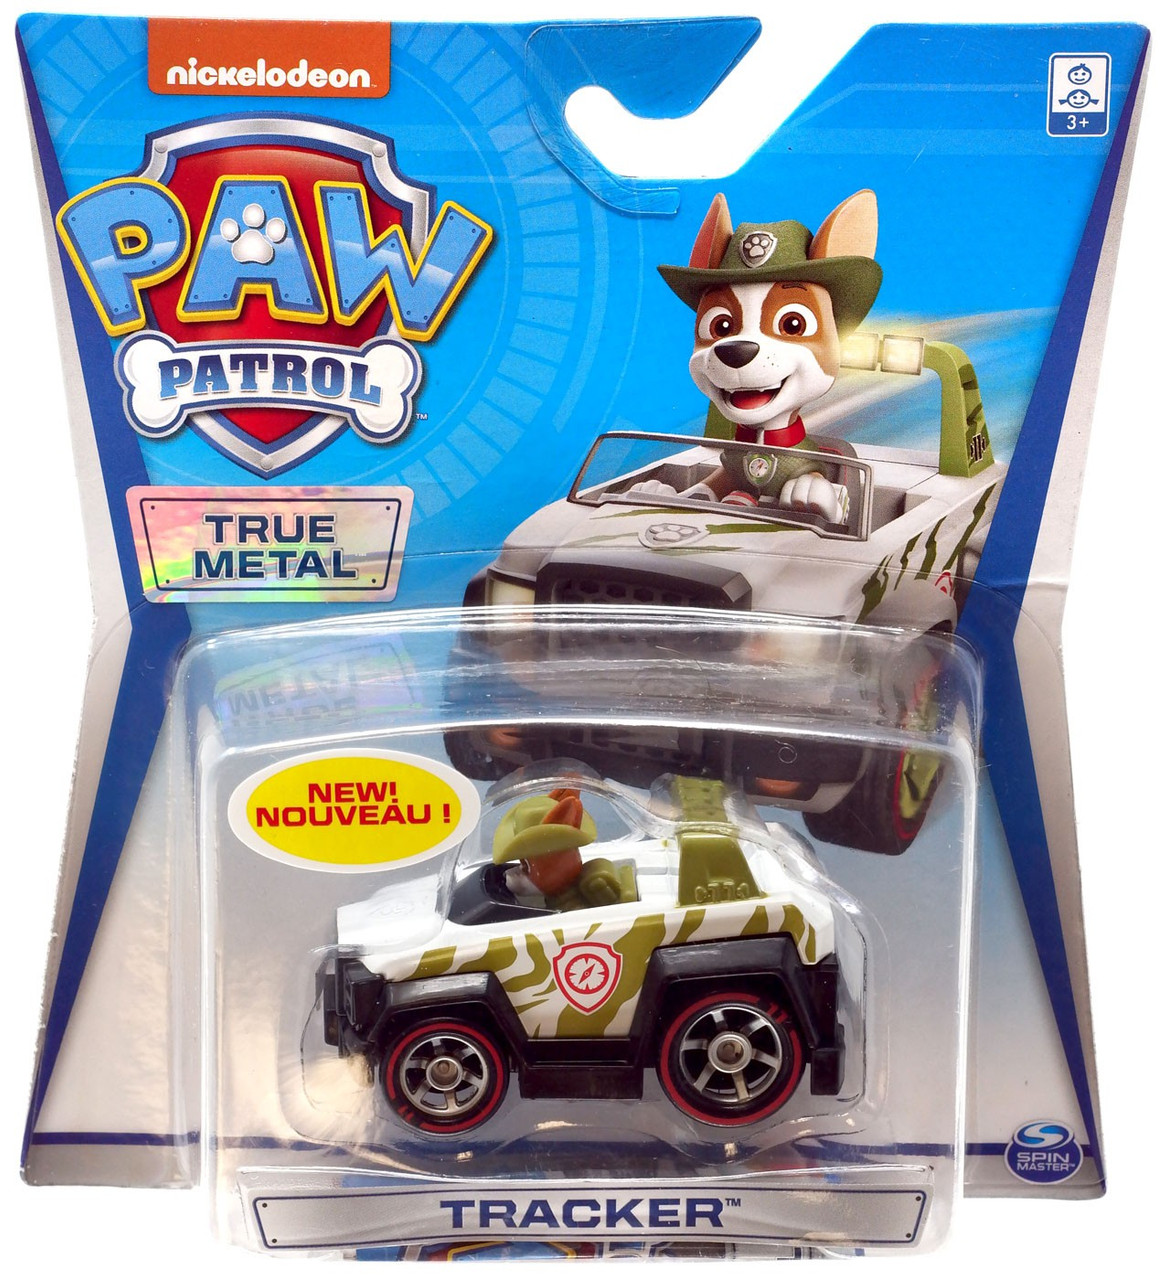 tracker paw patrol vehicle and figure